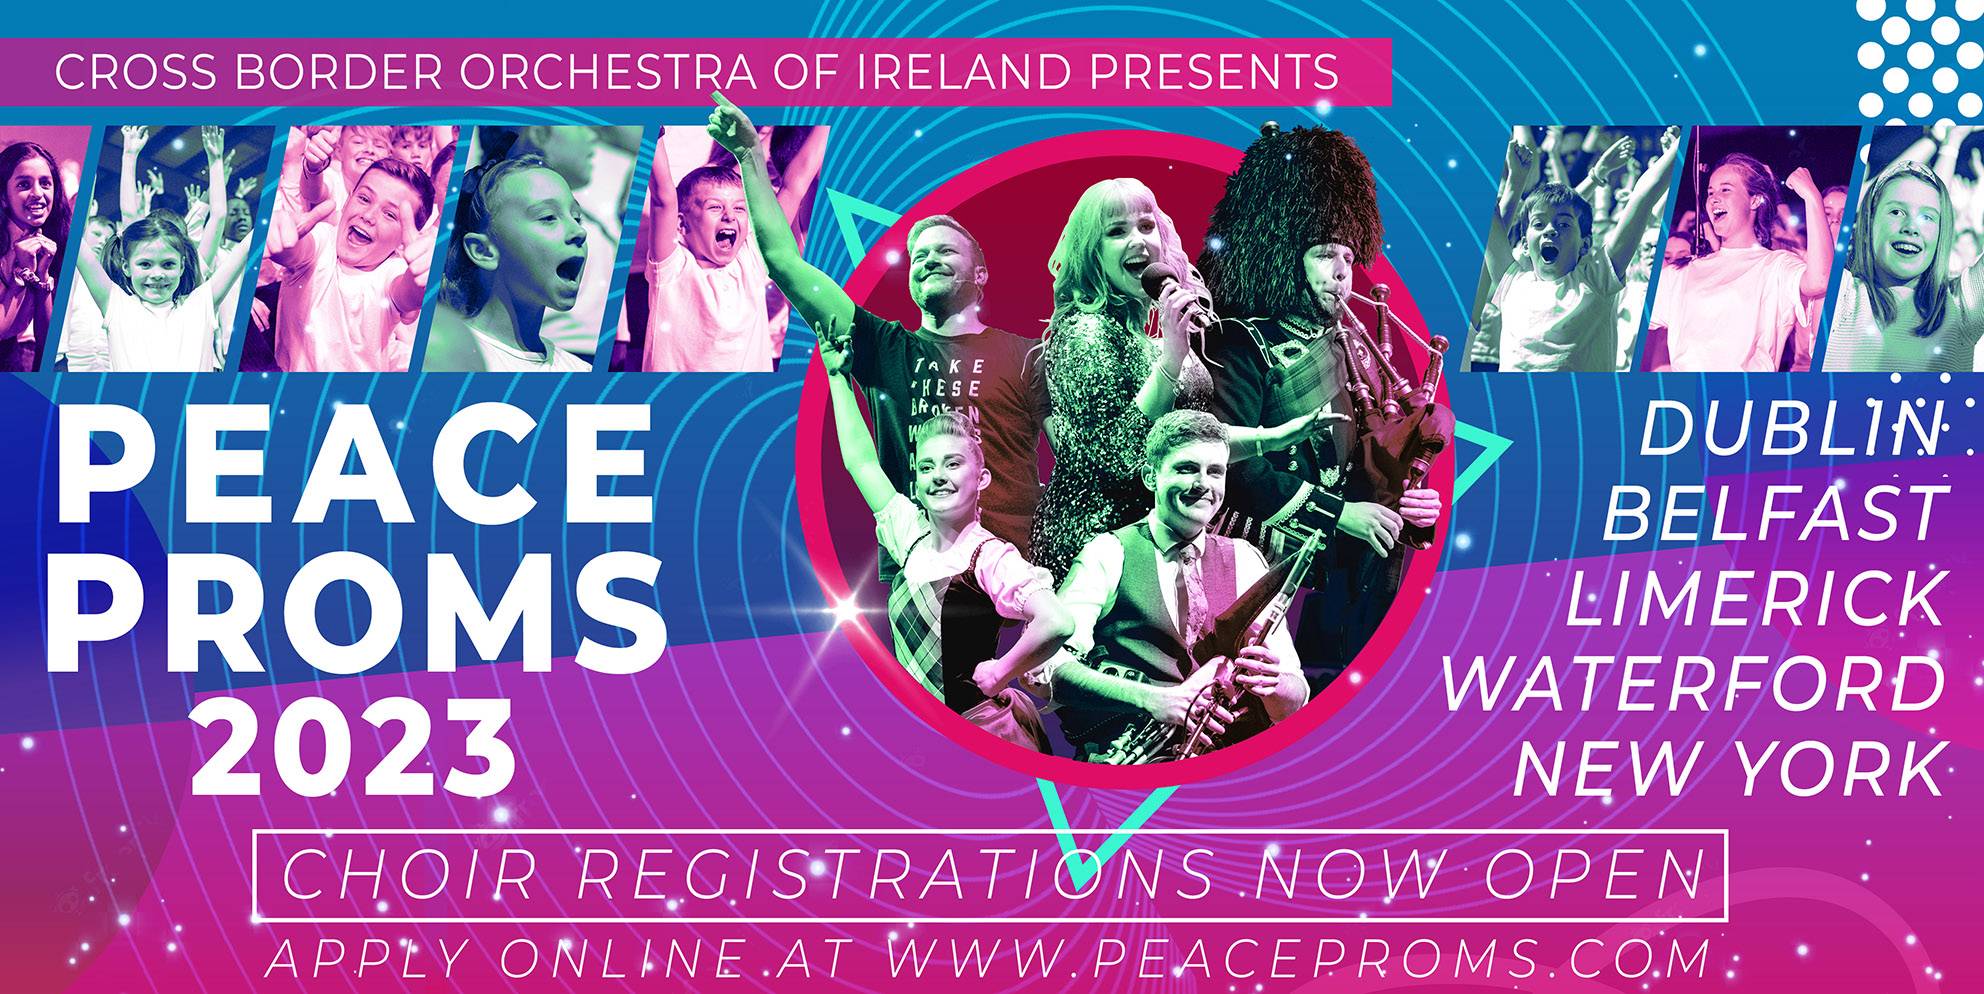 PEACE PROMS ANNOUNCED Cross Border Orchestra Of Ireland Peace Proms